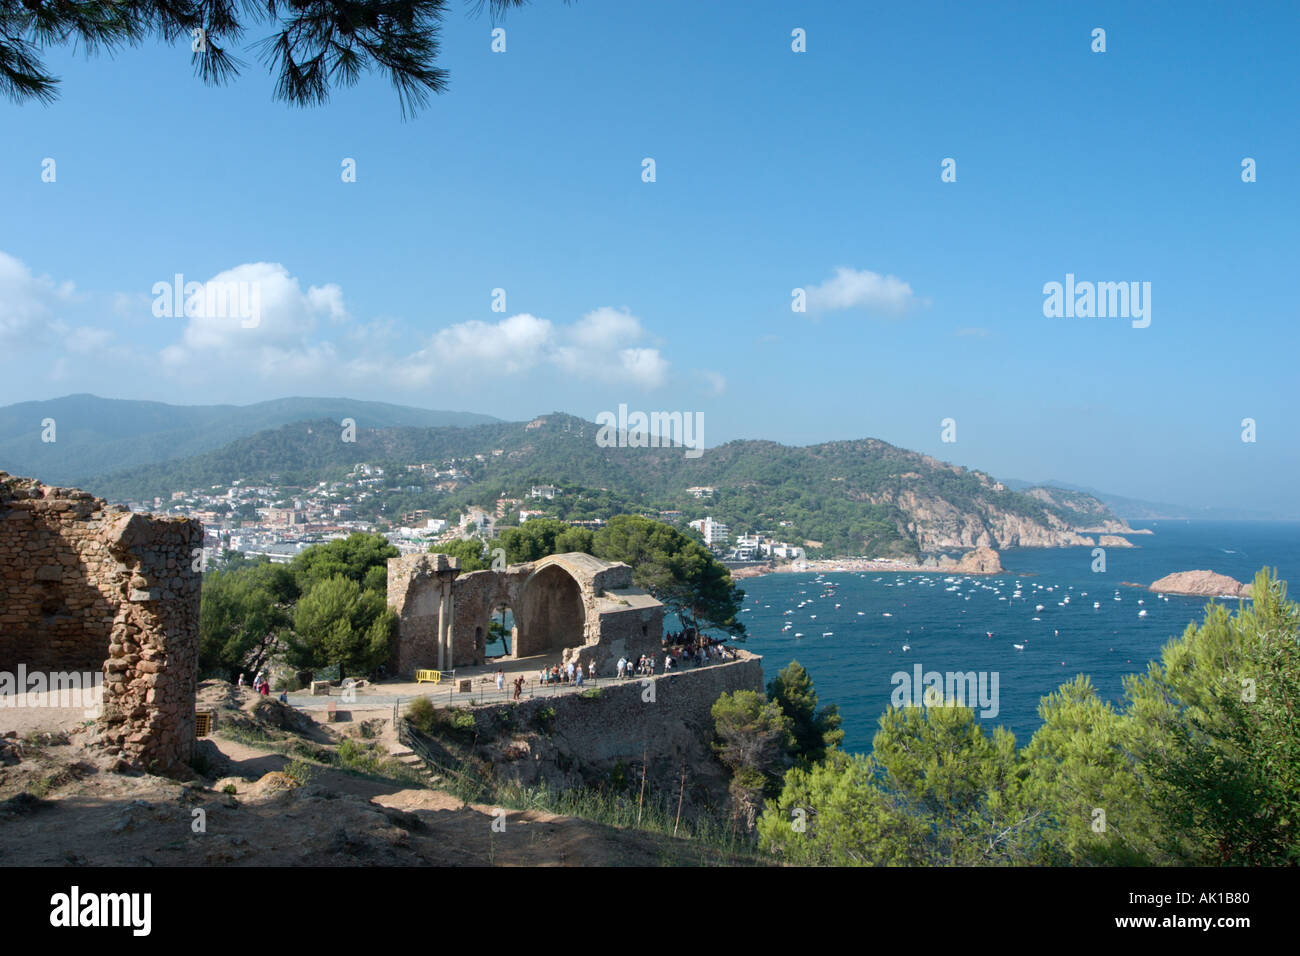 View from the Castle, Tossa de Mar, Costa Brava, Catalunya, Spain Stock Photo